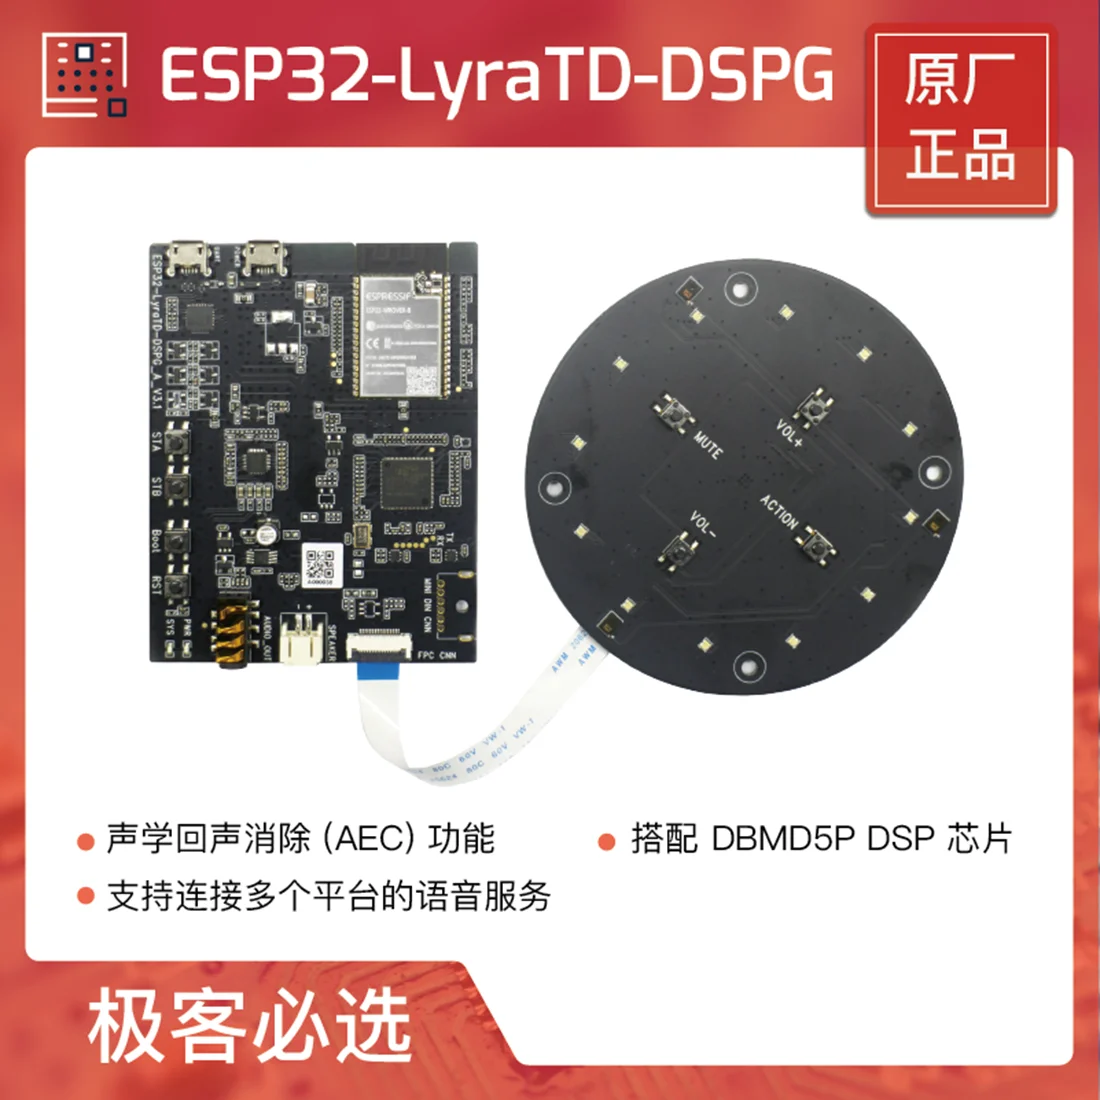 ESP32-LyraTD-DSPG Audio development board Espressif ESP32 development board